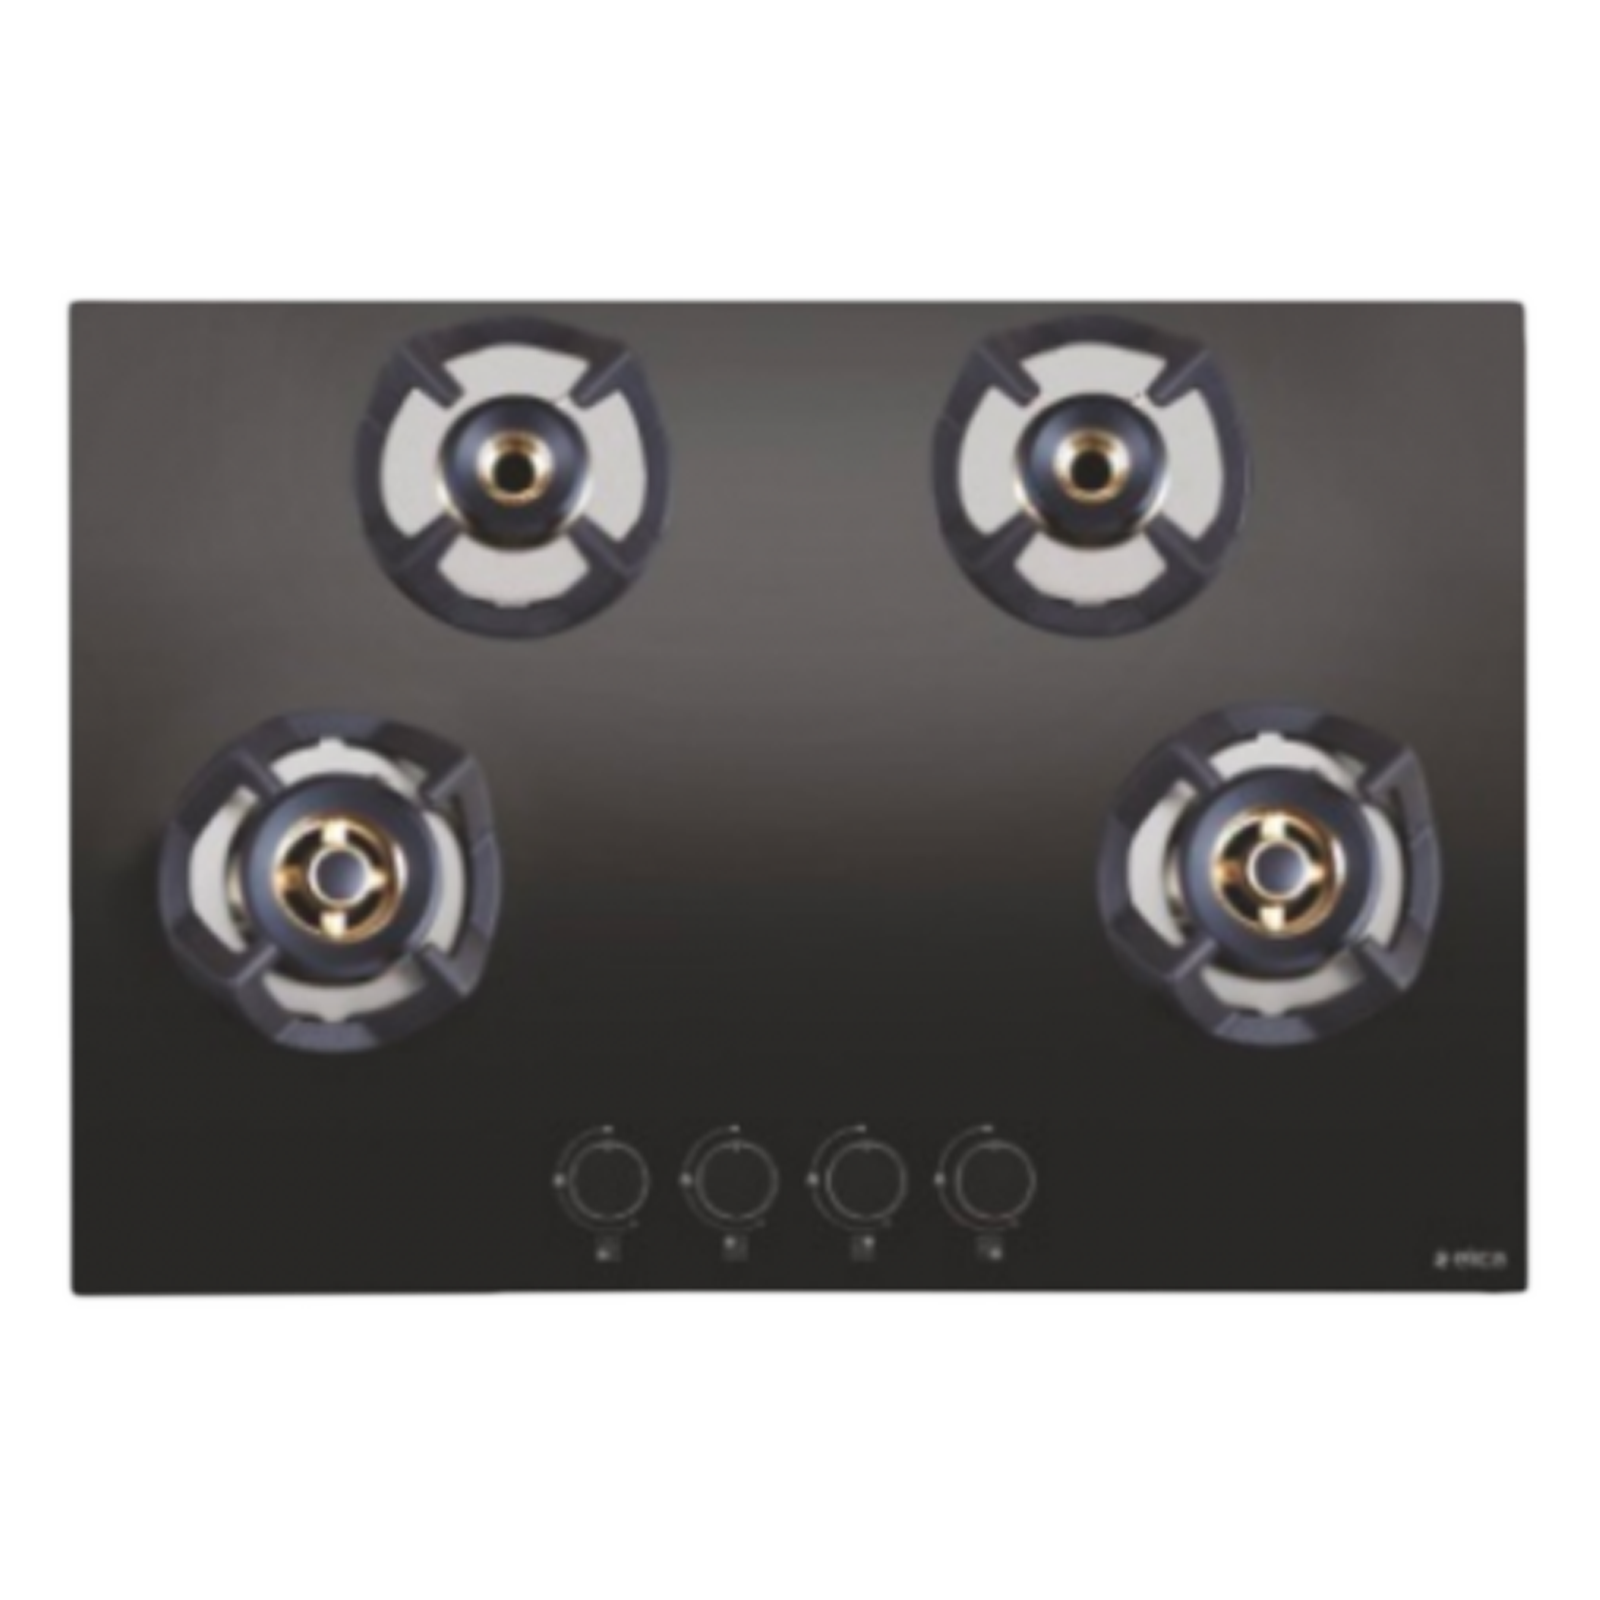 Elica Classic Flexi FB 75 DX 4 Burner Gas Hob (Round Metallic knob, Black)_1